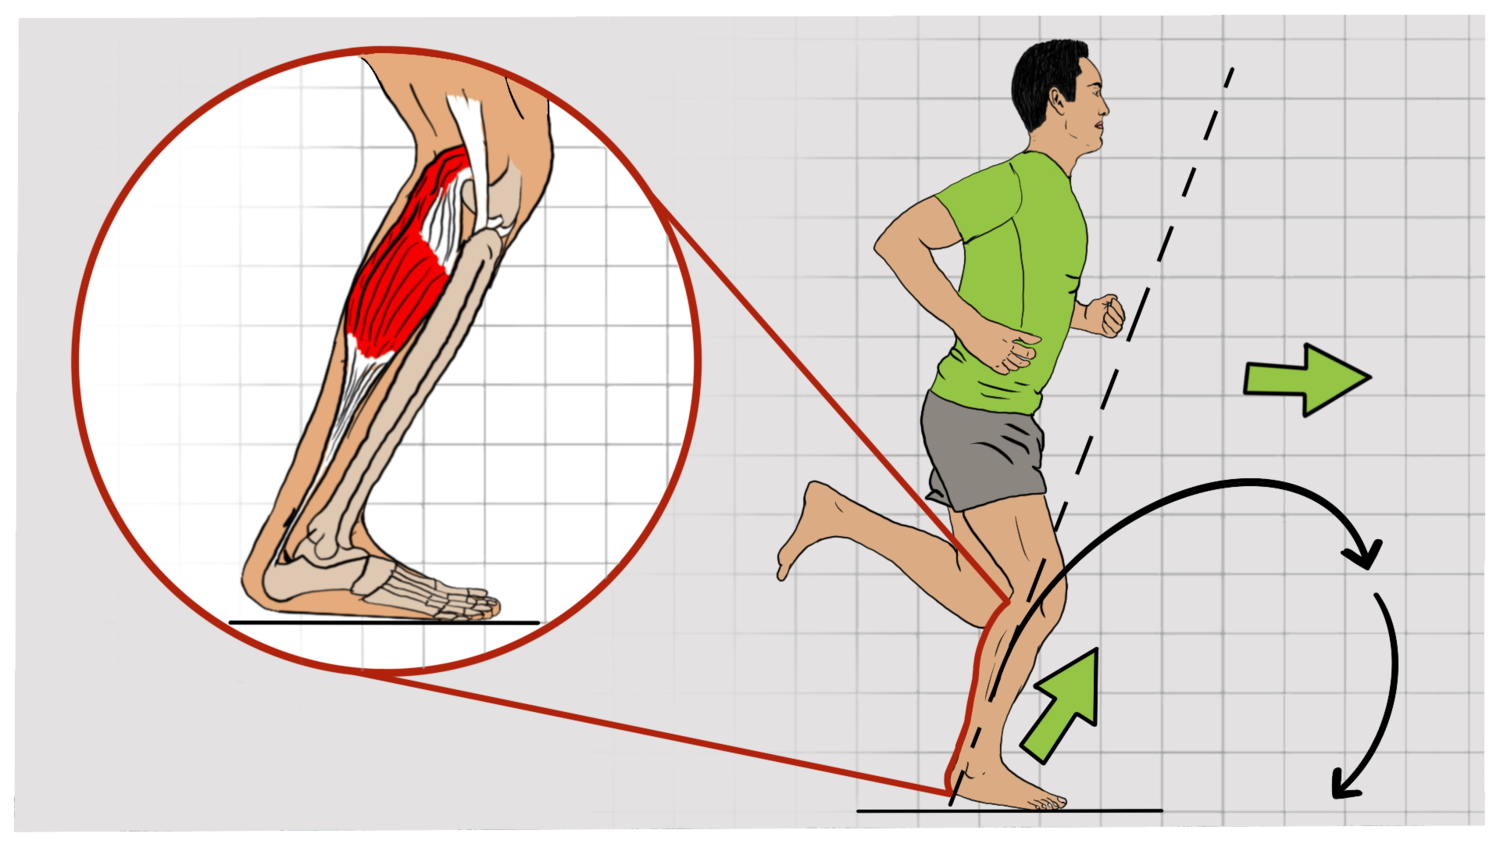 Biomechanics of Barefoot Running: 6 Risks and Benefits - Stay Tuned Sports  Medicine